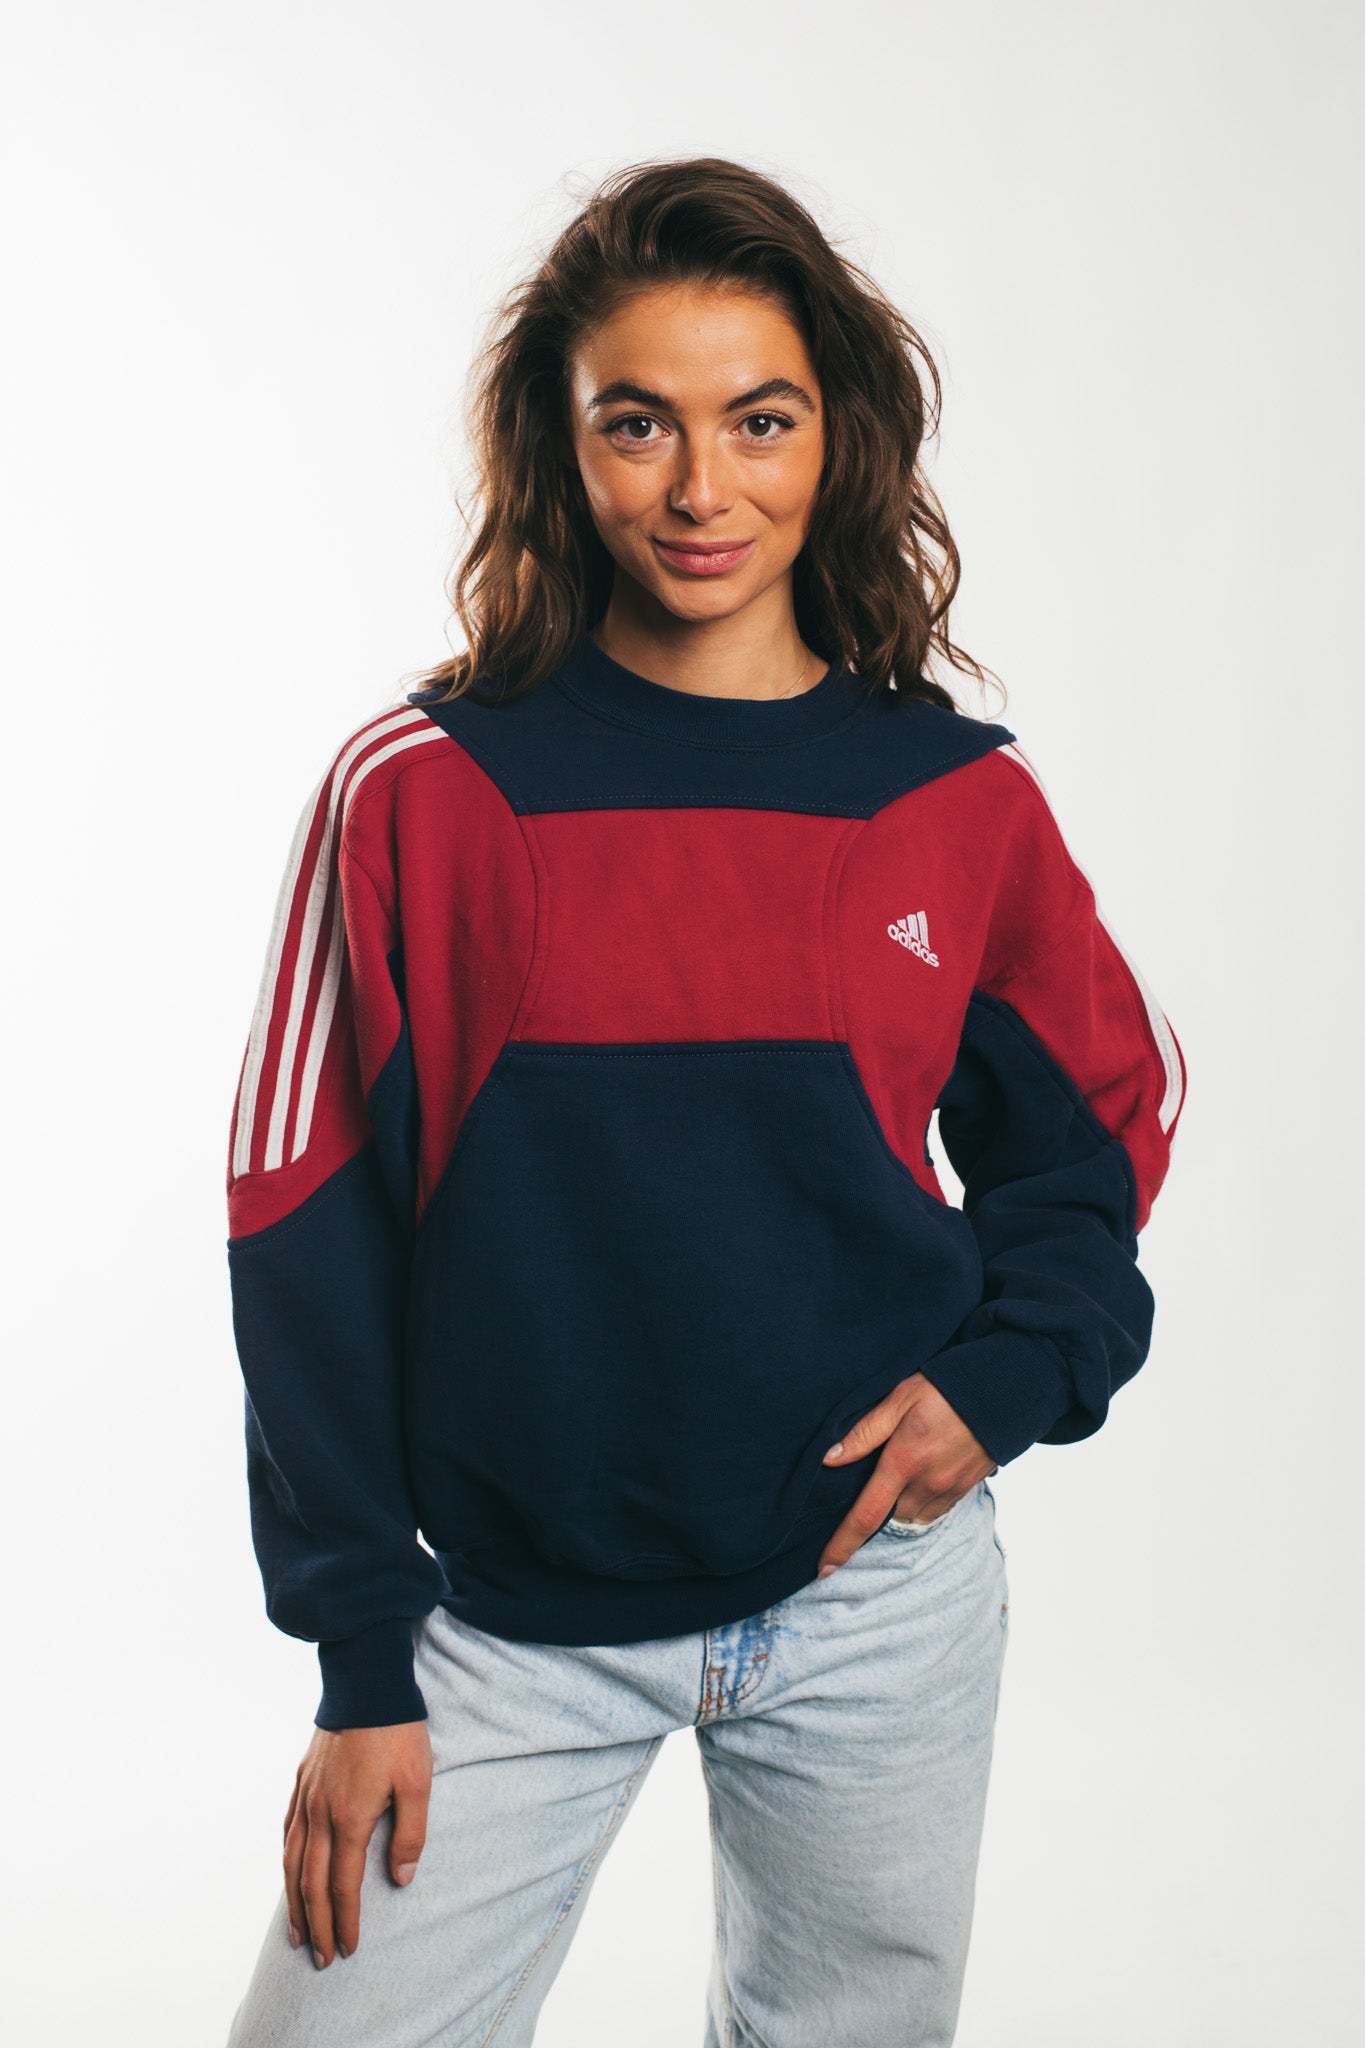 Adidas - Sweatshirt (XS)